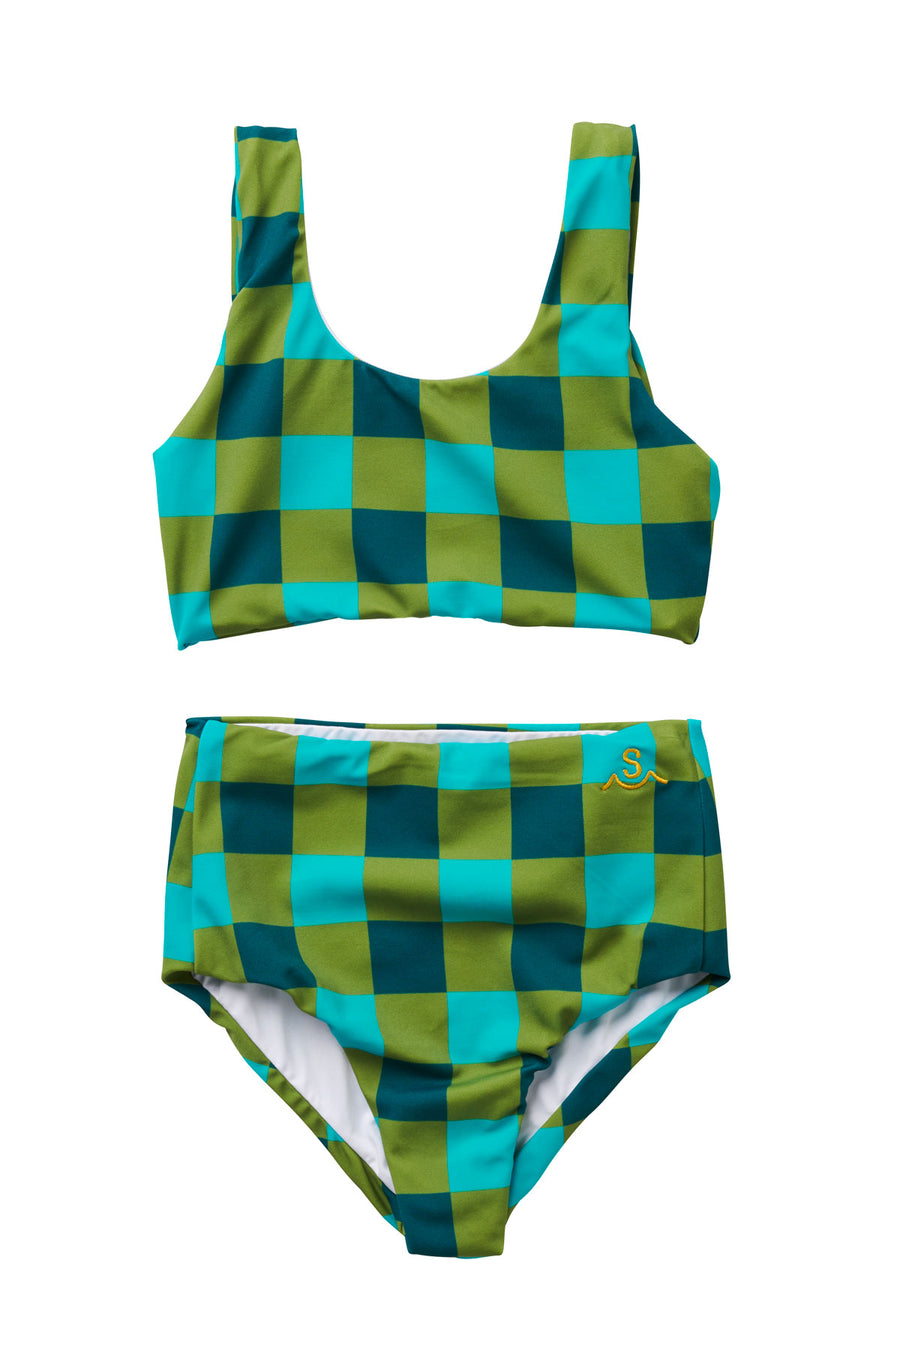 Seaside Gingham / Two Piece Swimsuit / Sea Moss